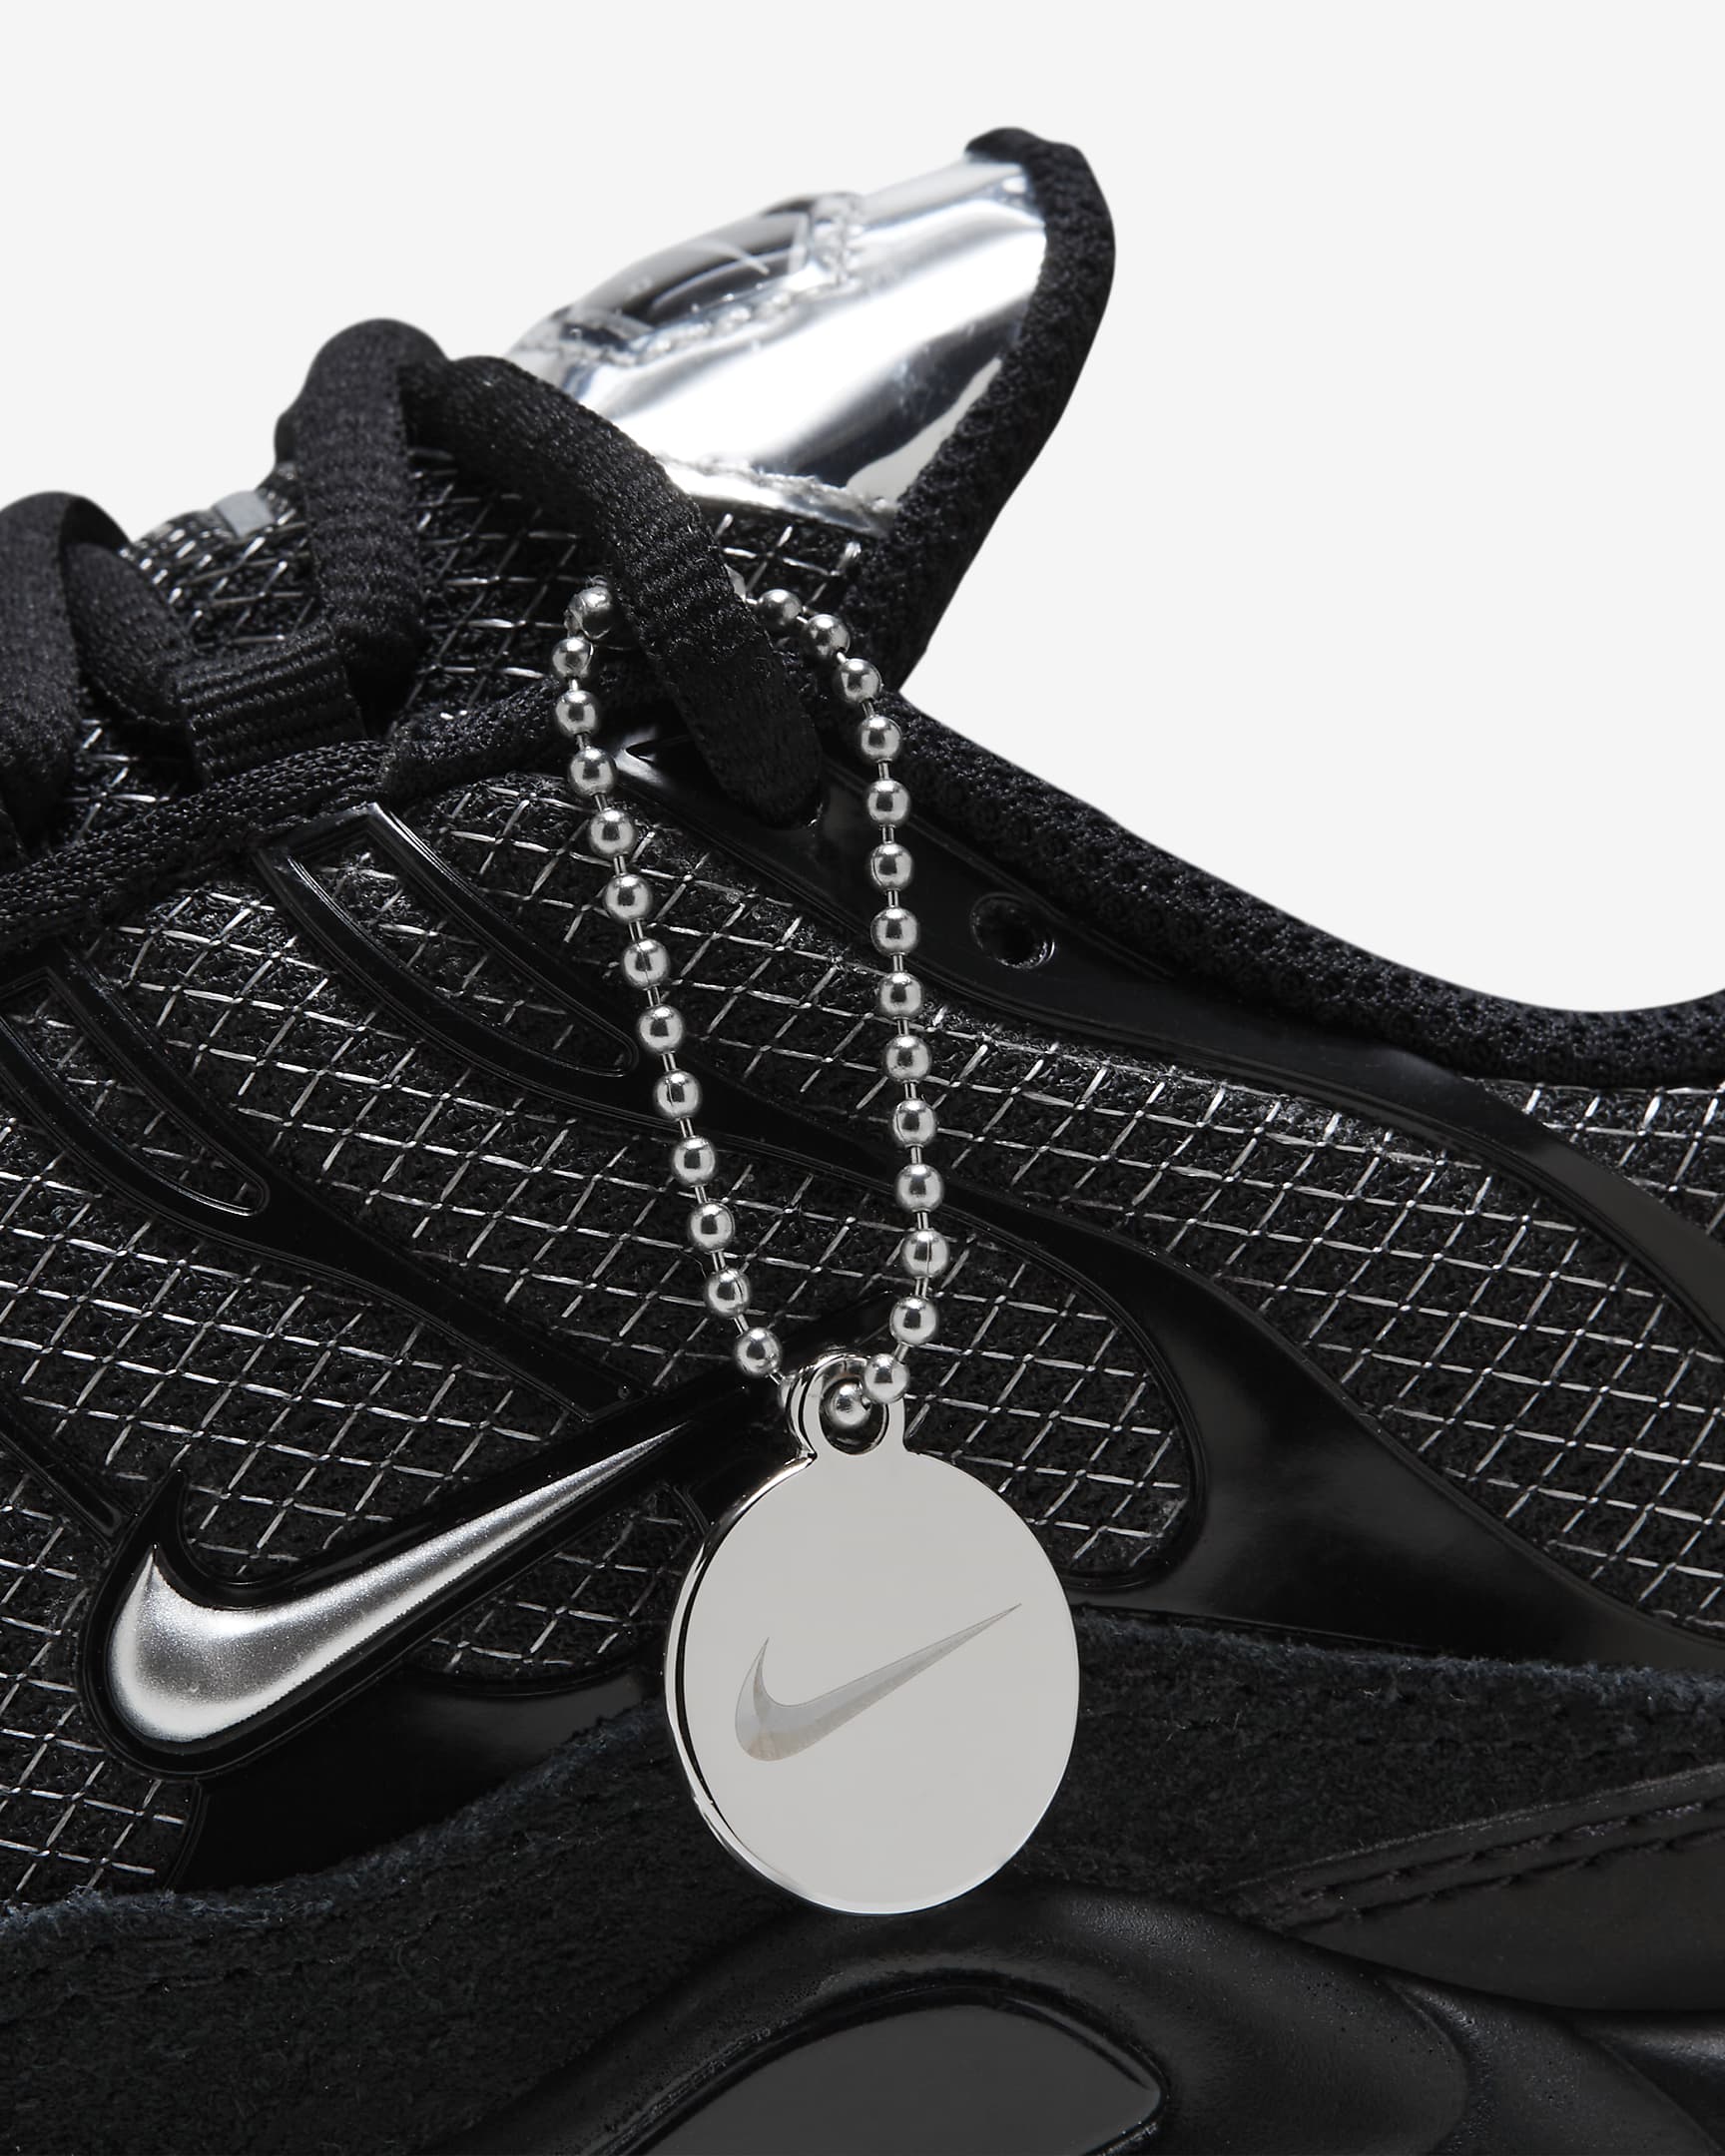 Nike Air Max Plus Women's Shoes - Black/Turquoise Blue/Metallic Silver